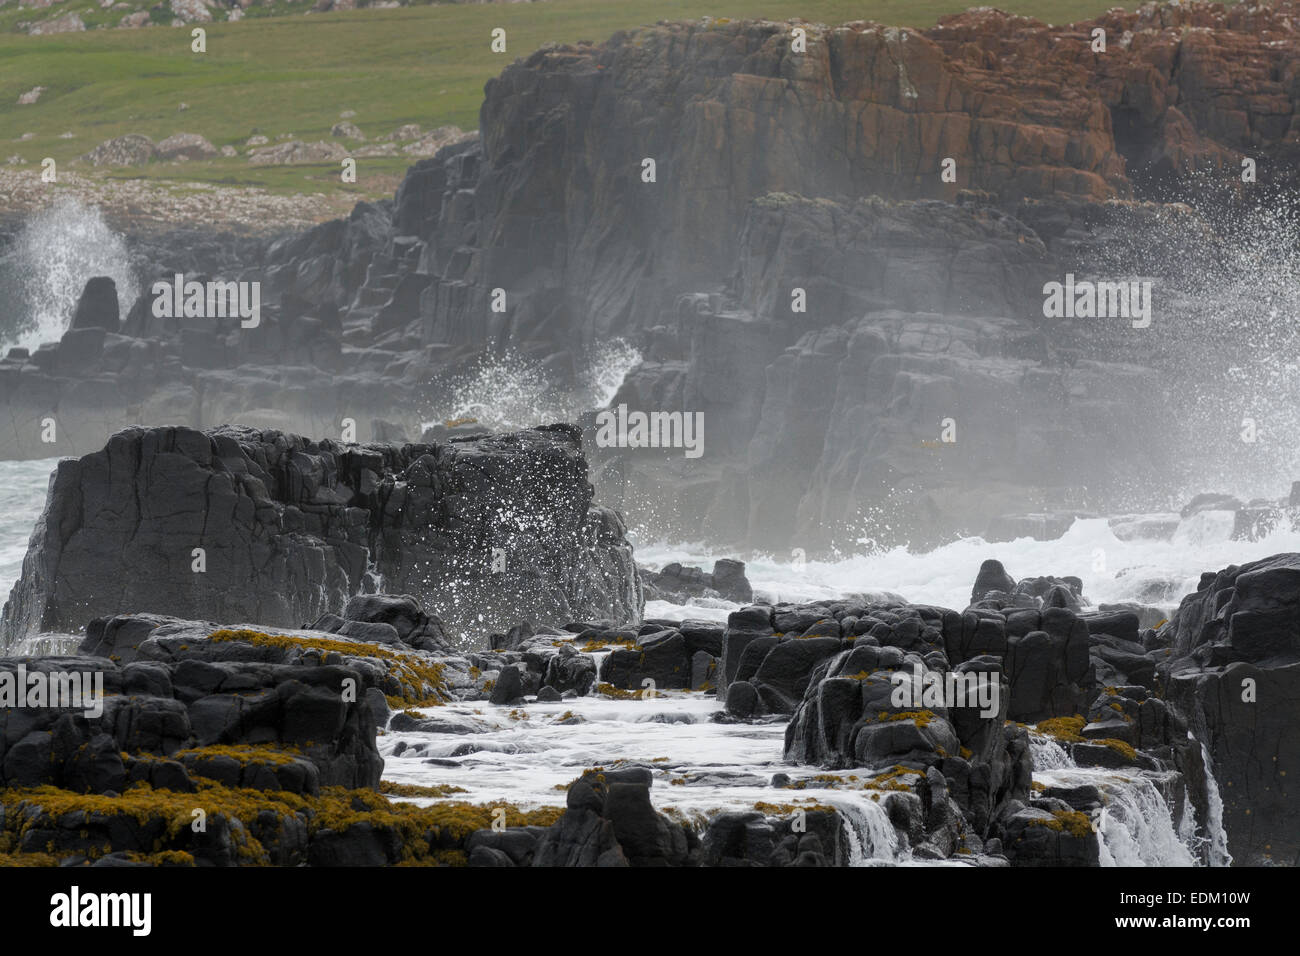 rocks and stormy sea staffin isle of skye Stock Photo